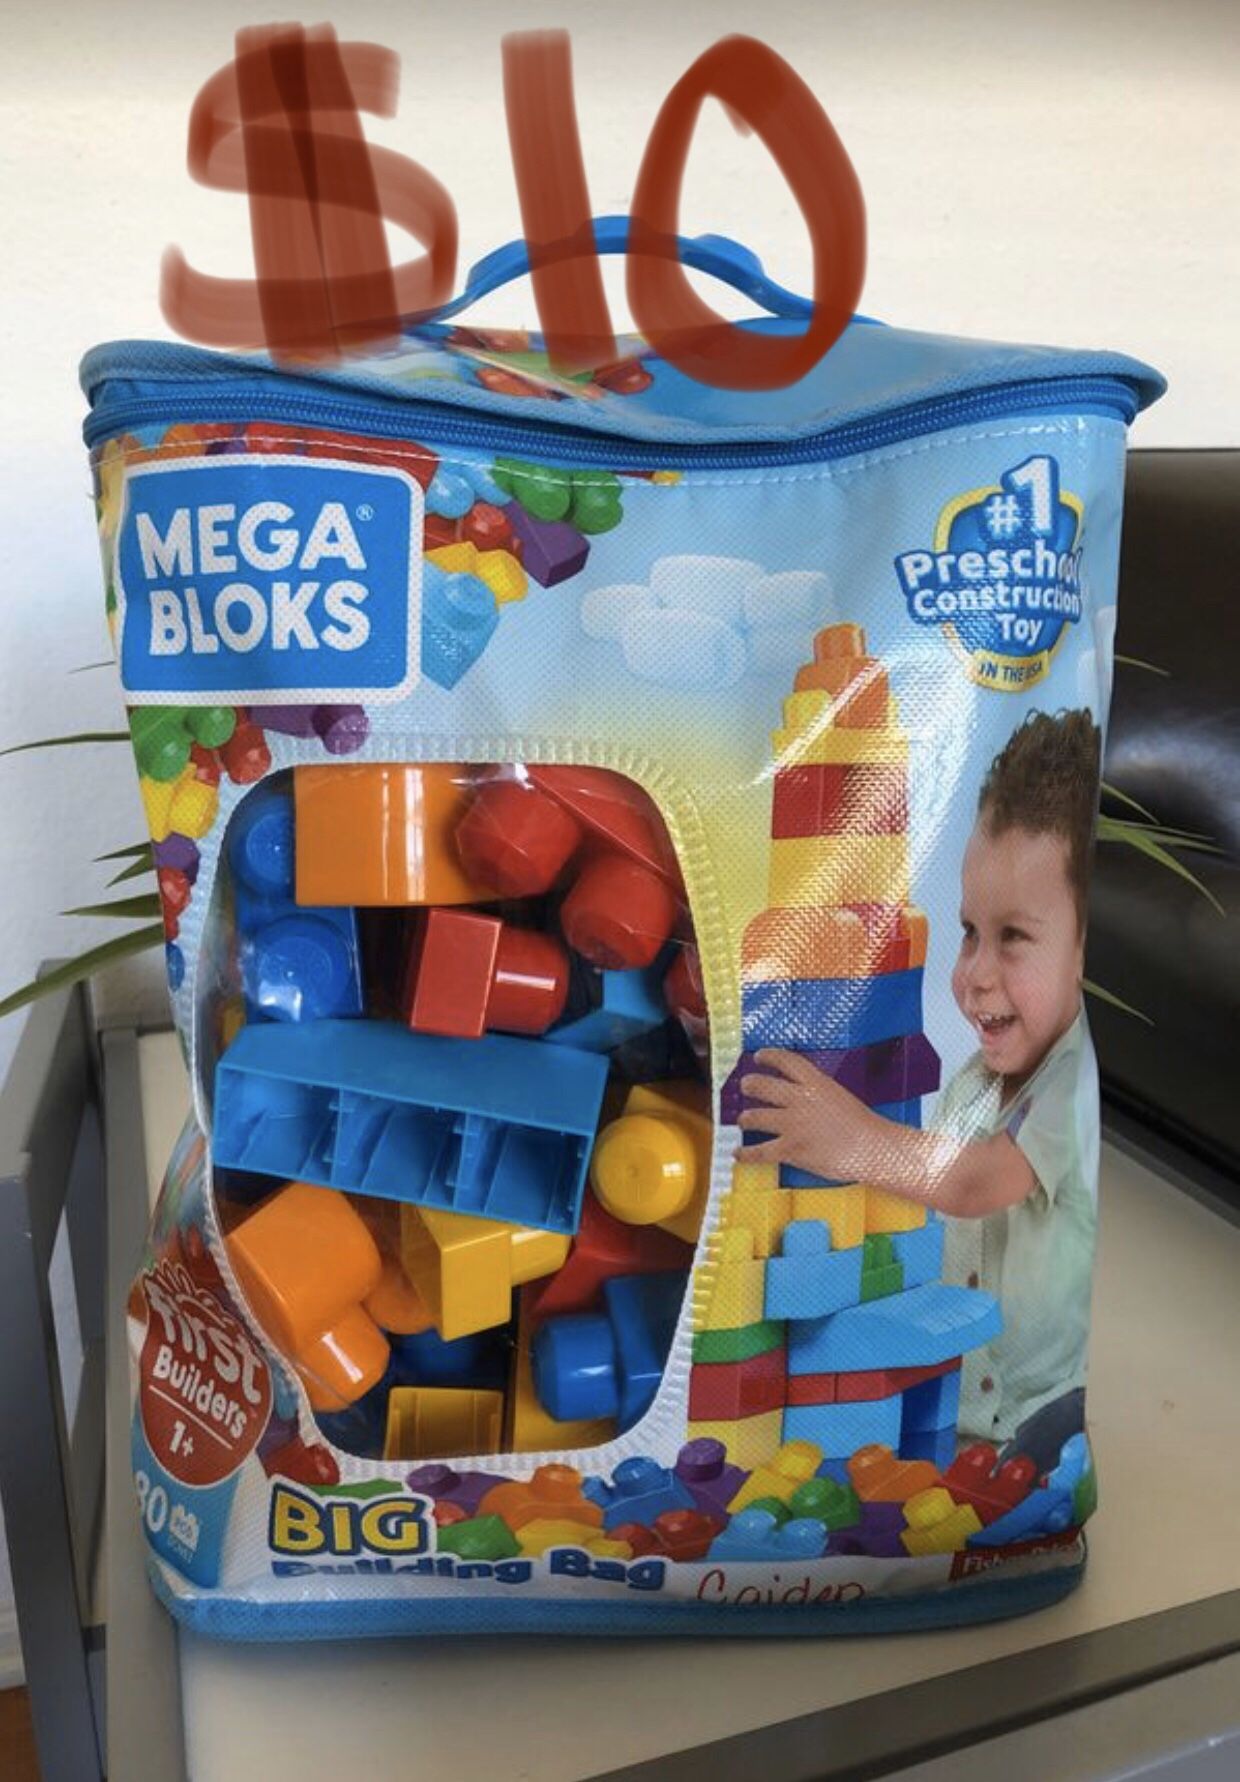 “Mega Bloks” children’s toy blocks